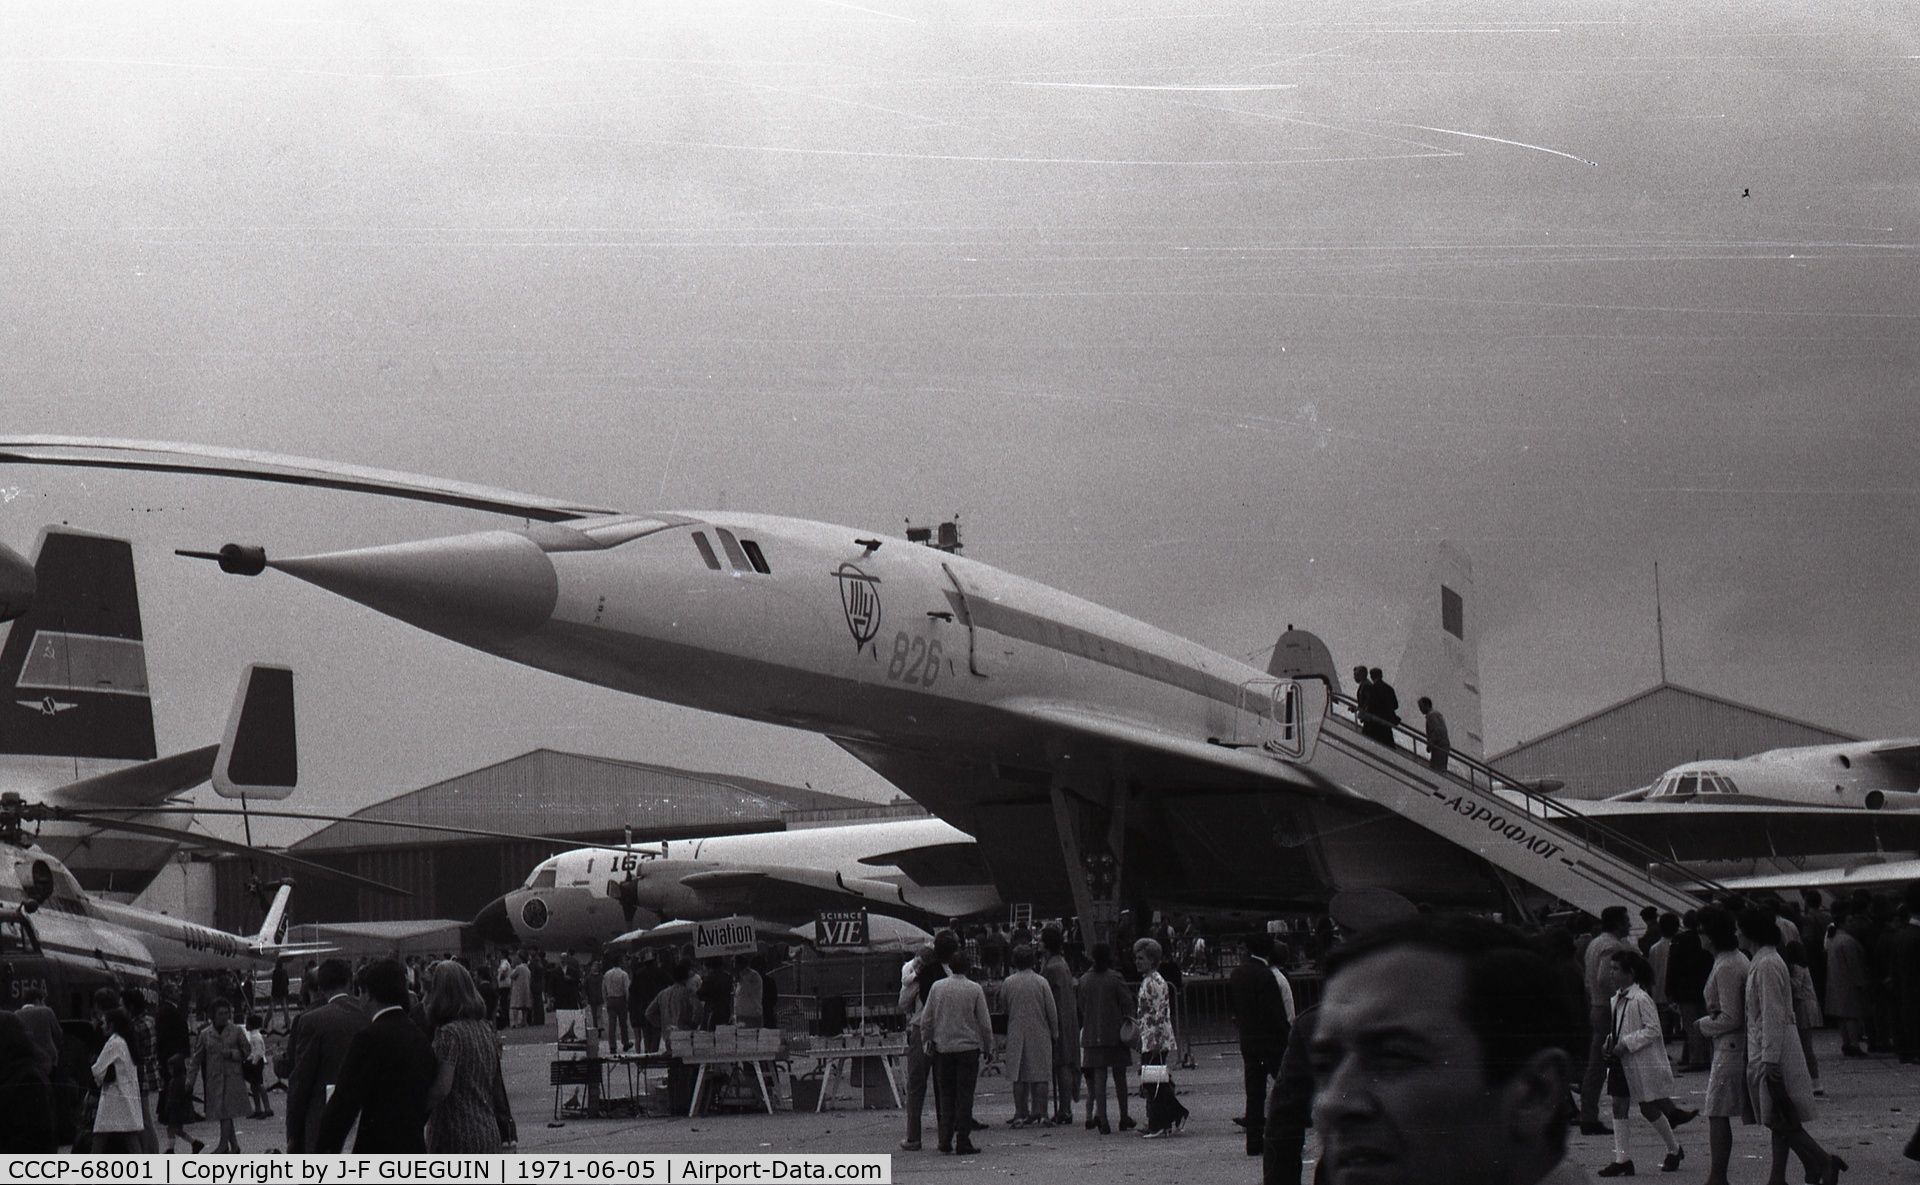 CCCP-68001, 1968 Tupolev Tu-144 C/N 00 00, On display at 1971 Paris-Le Bourget Airshow.